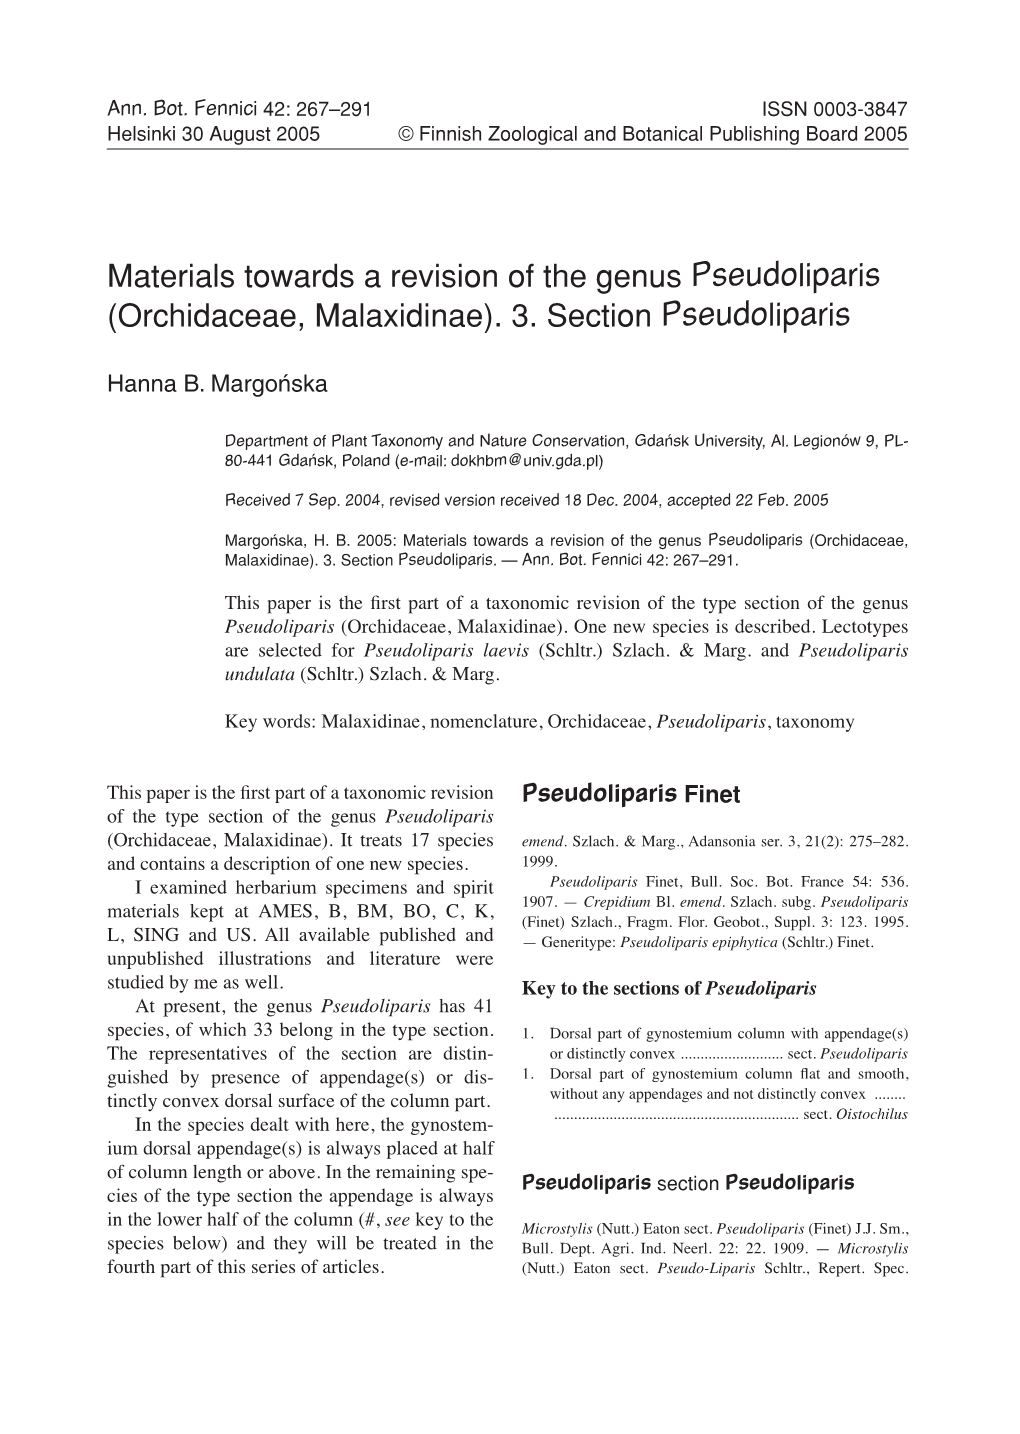 Materials Towards a Revision of the Genus Pseudoliparis (Orchidaceae, Malaxidinae)